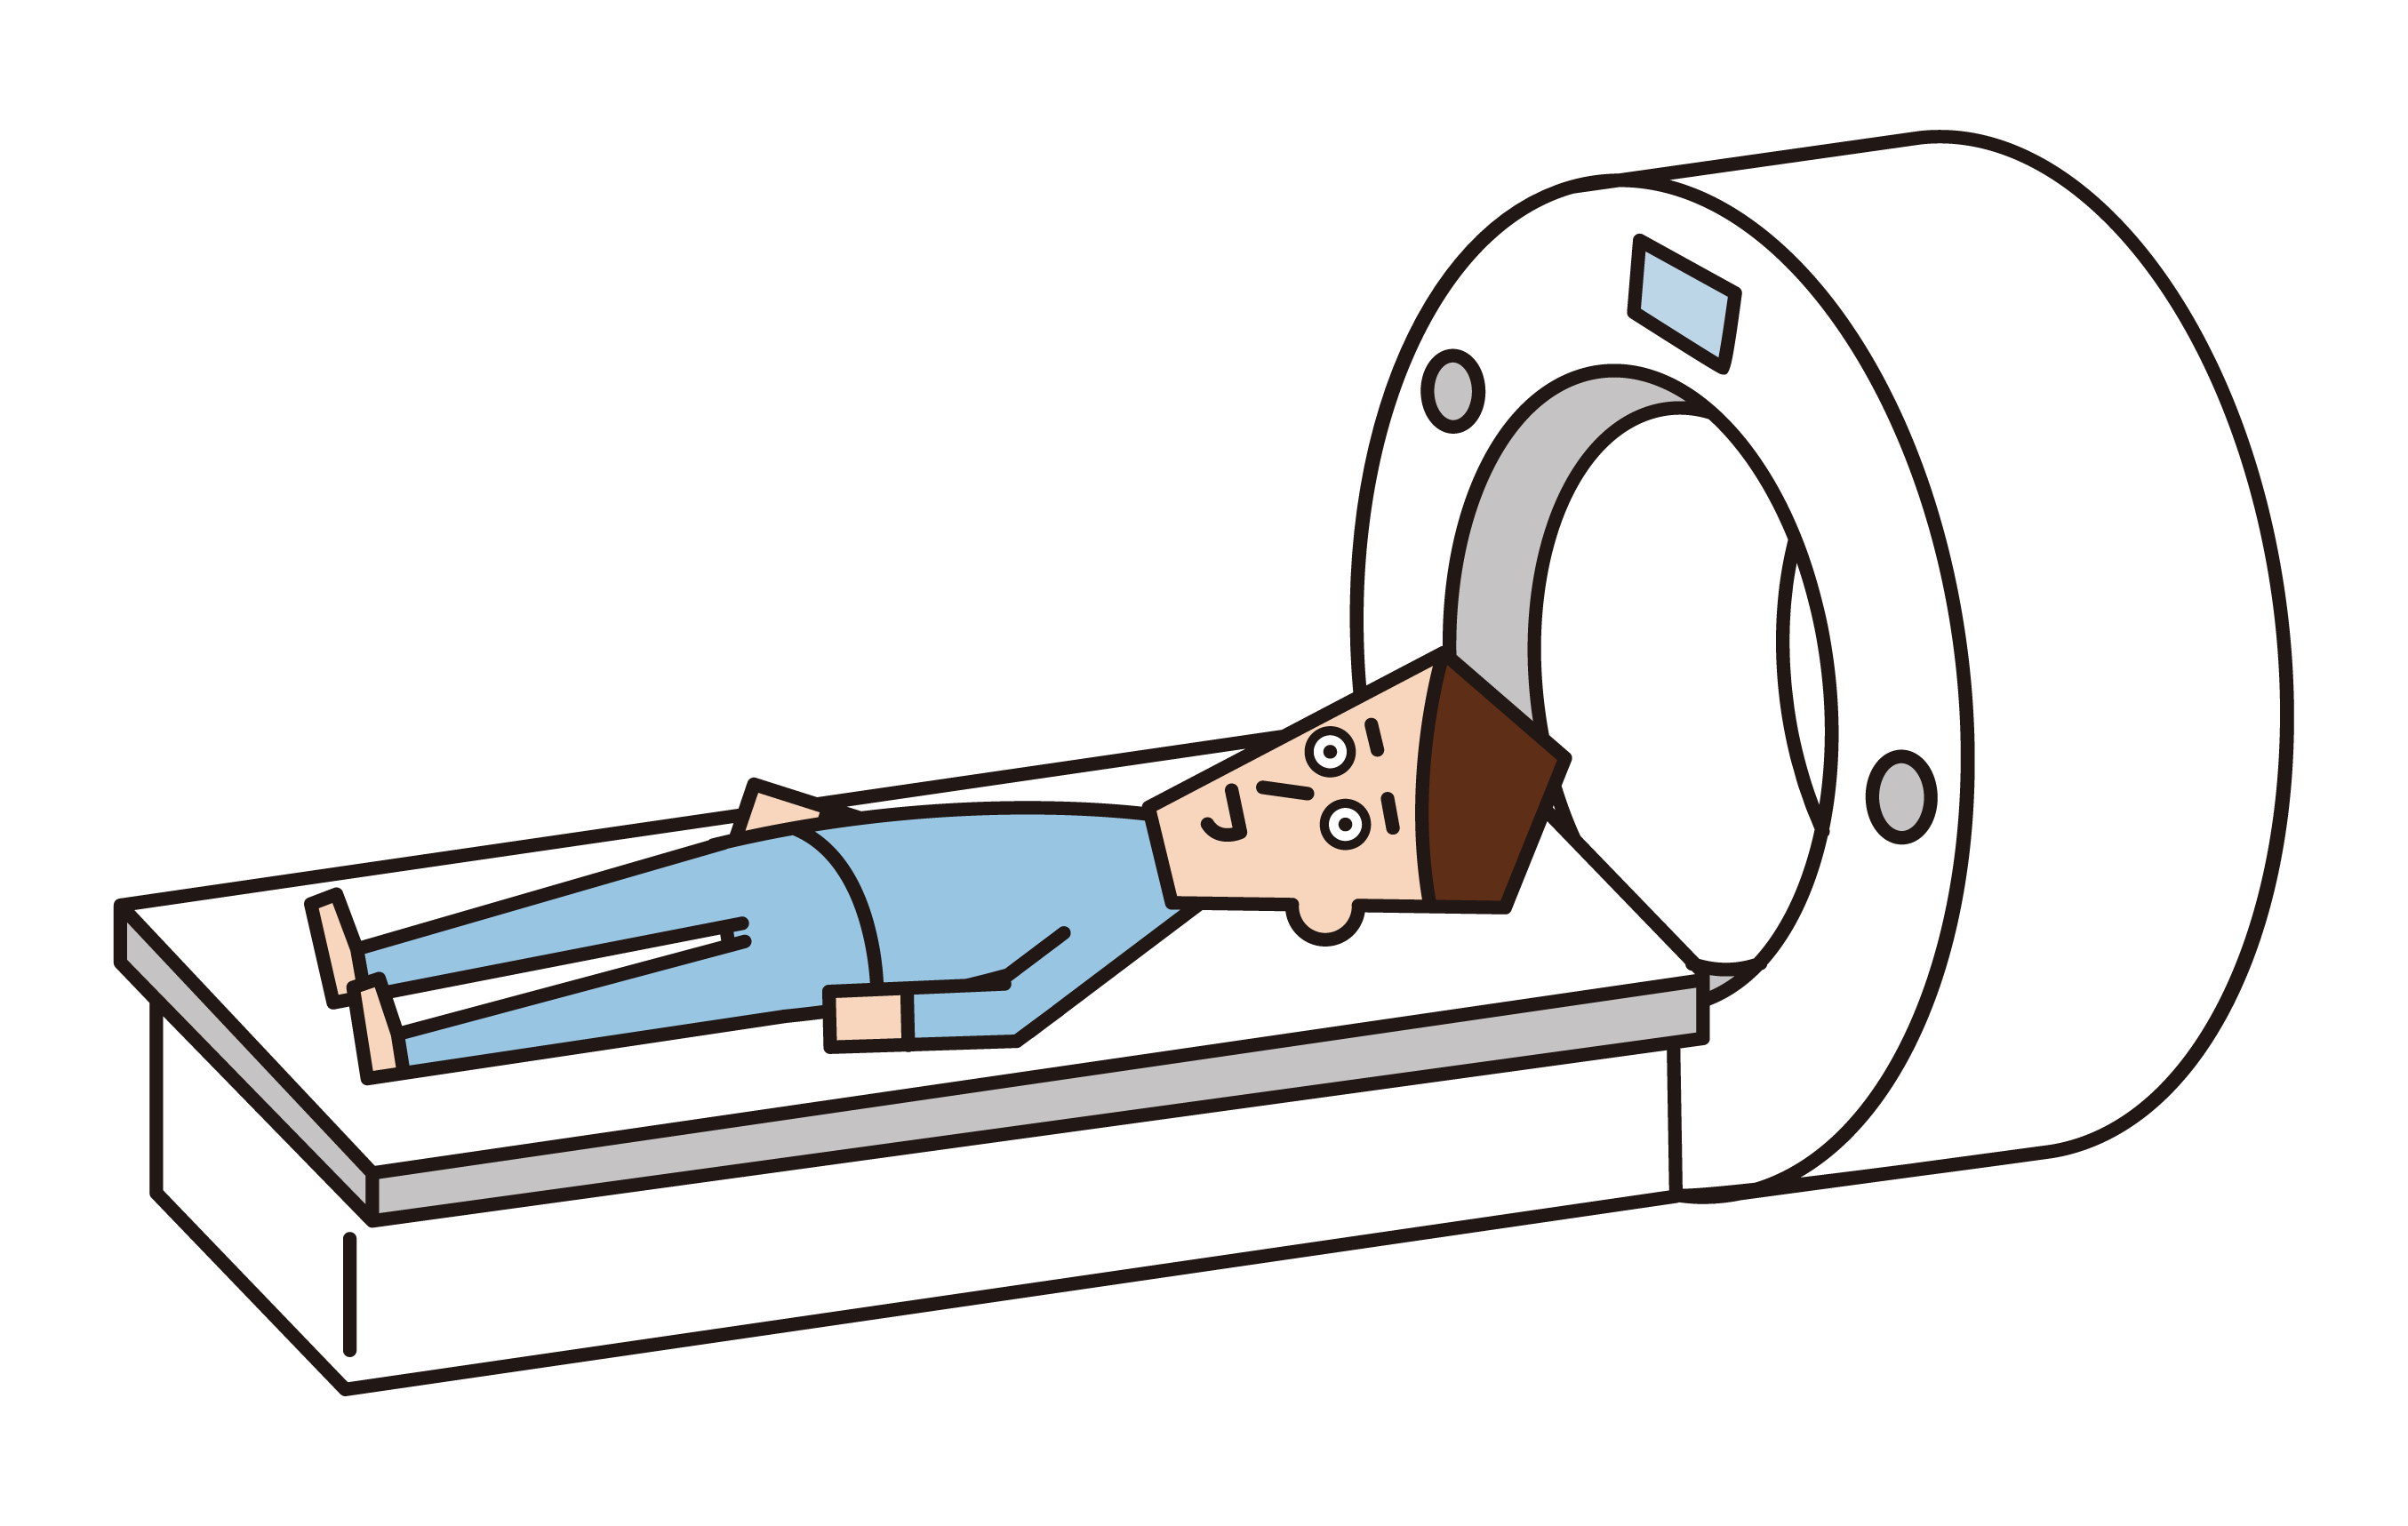 Illustration of a man who underwent an MRI examination